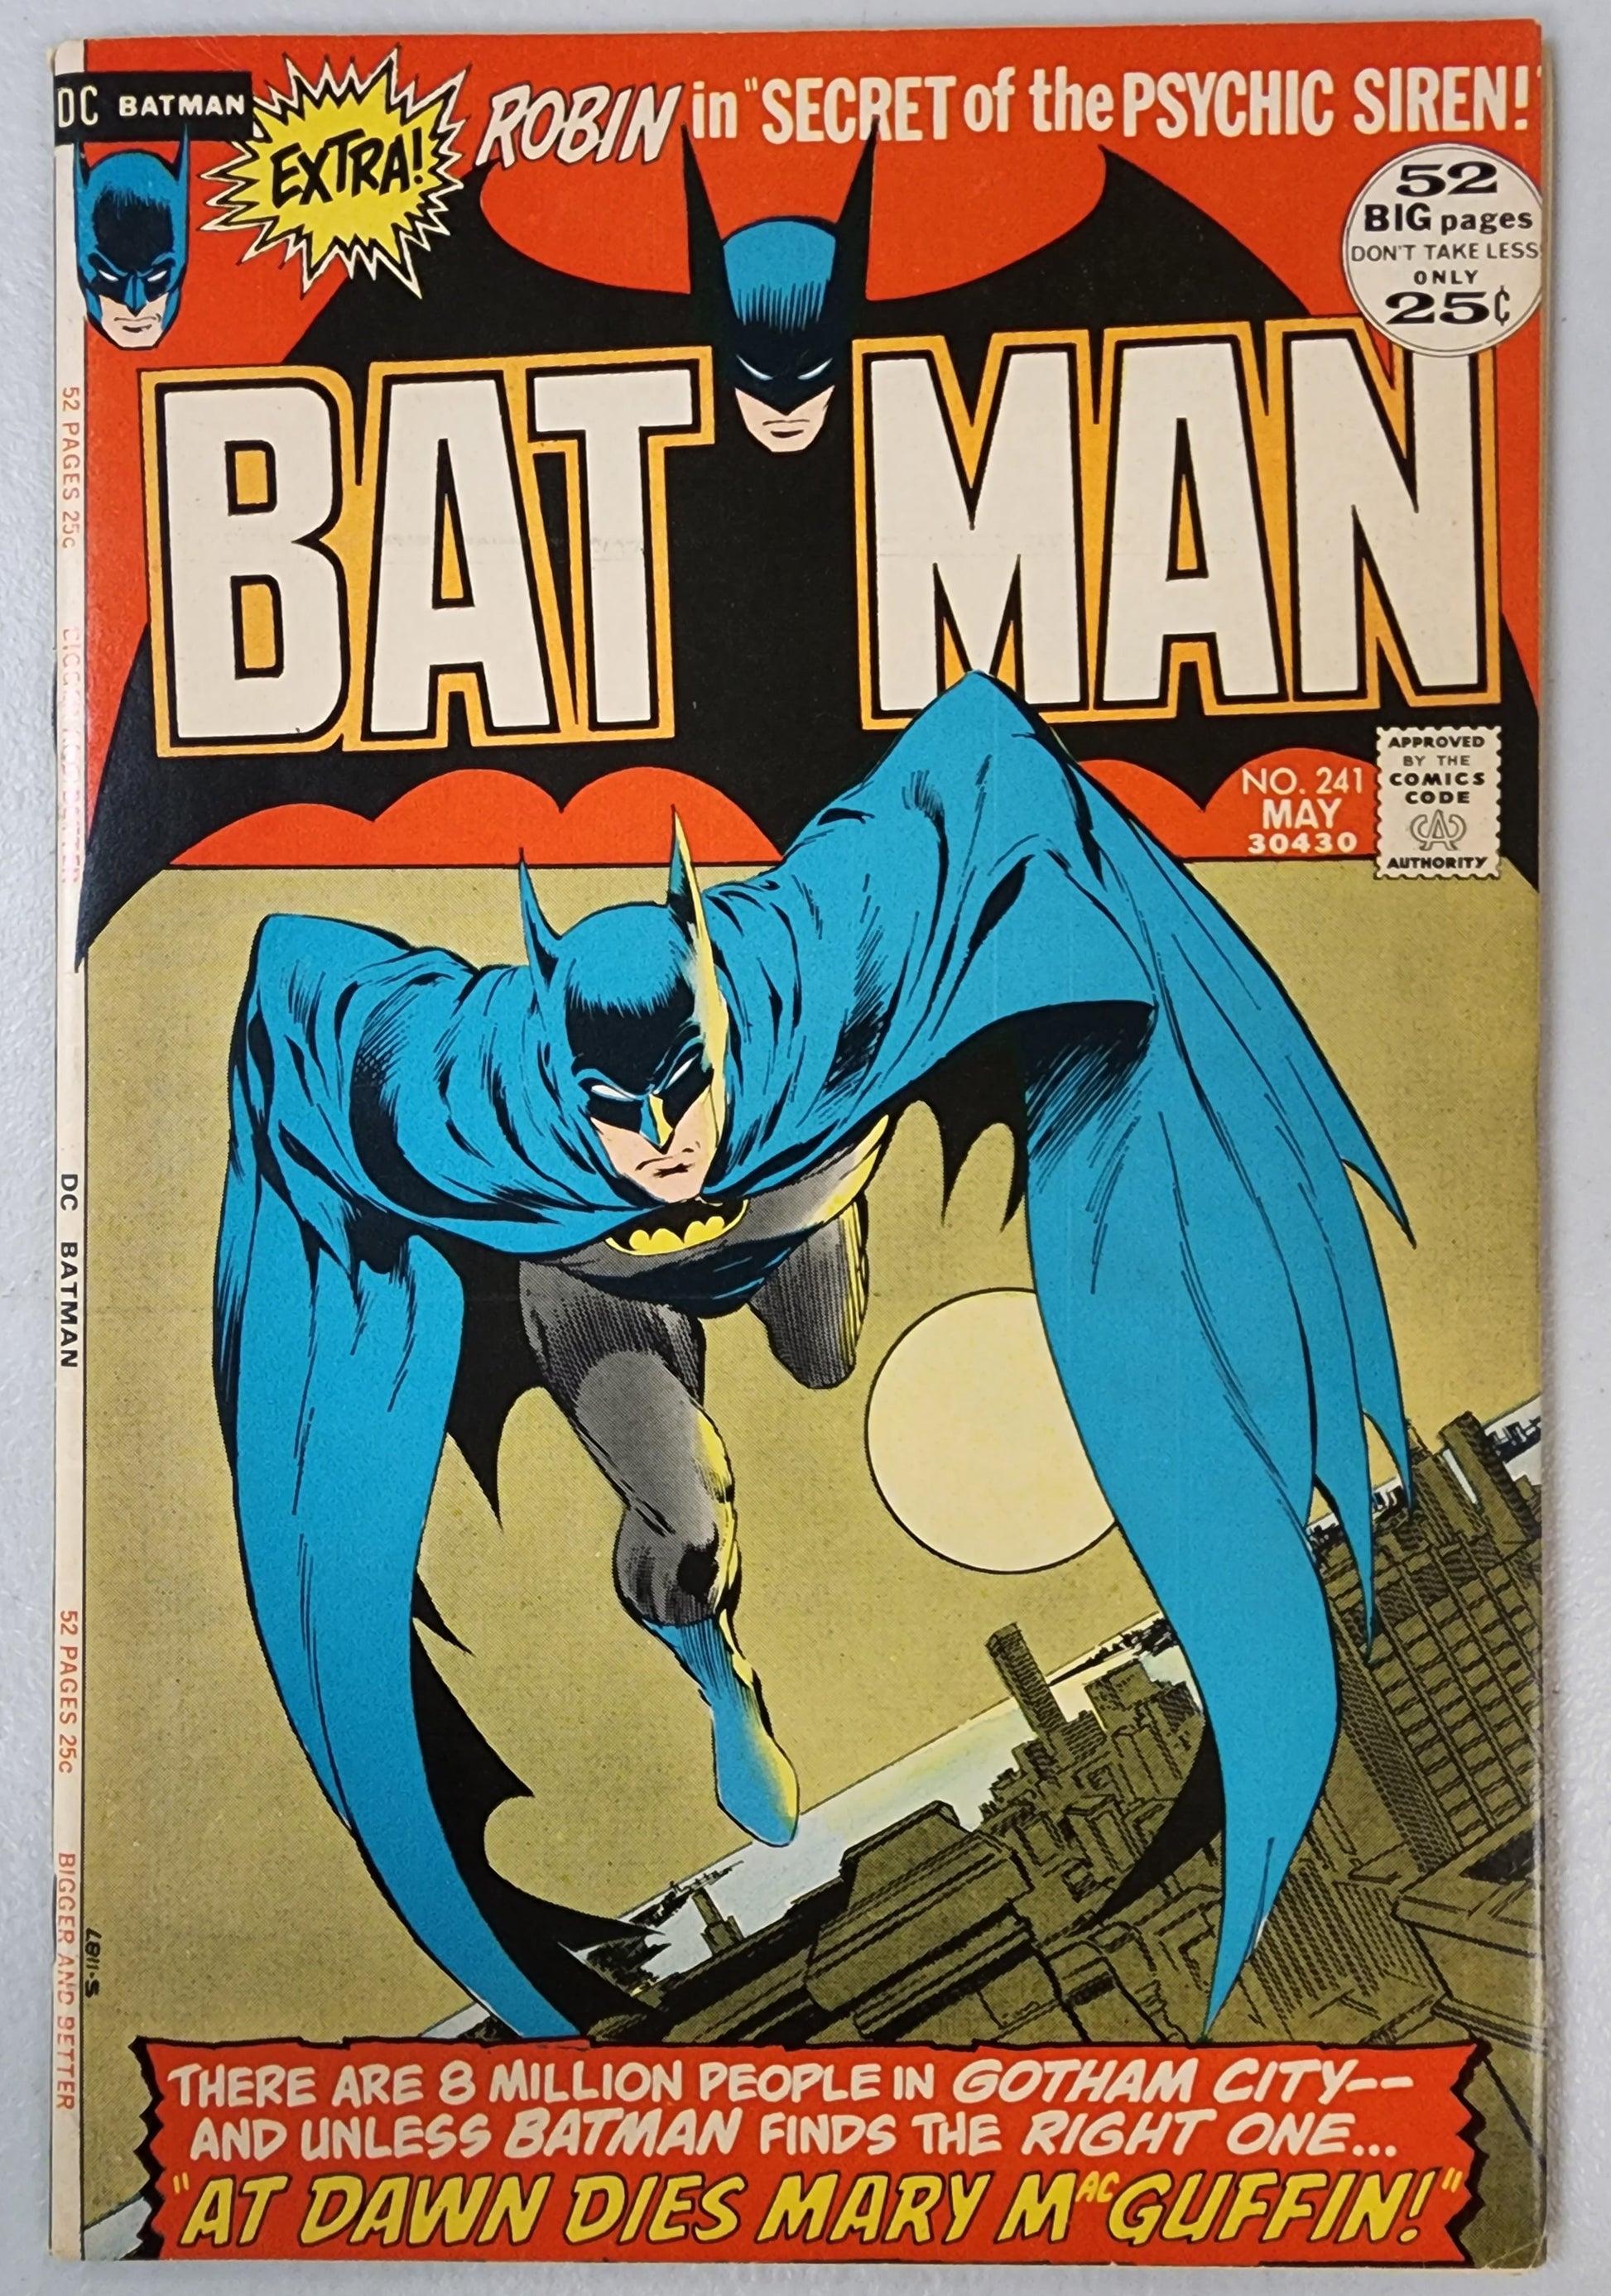 Descubrir 60+ imagen neal adams batman covers